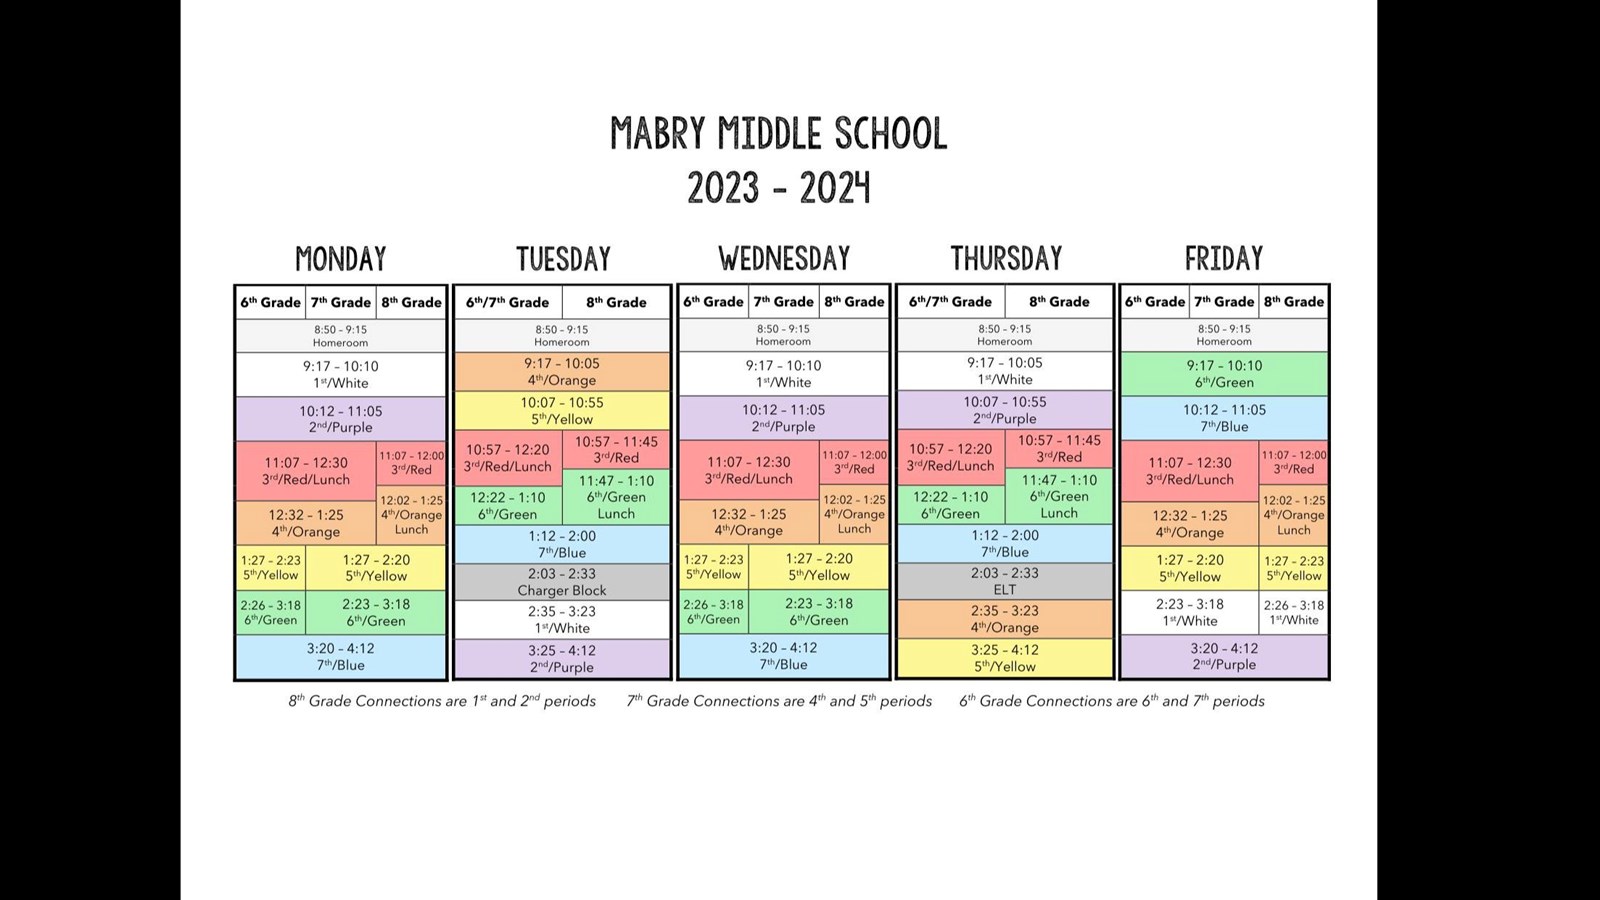 2023-2024 Bell Schedule